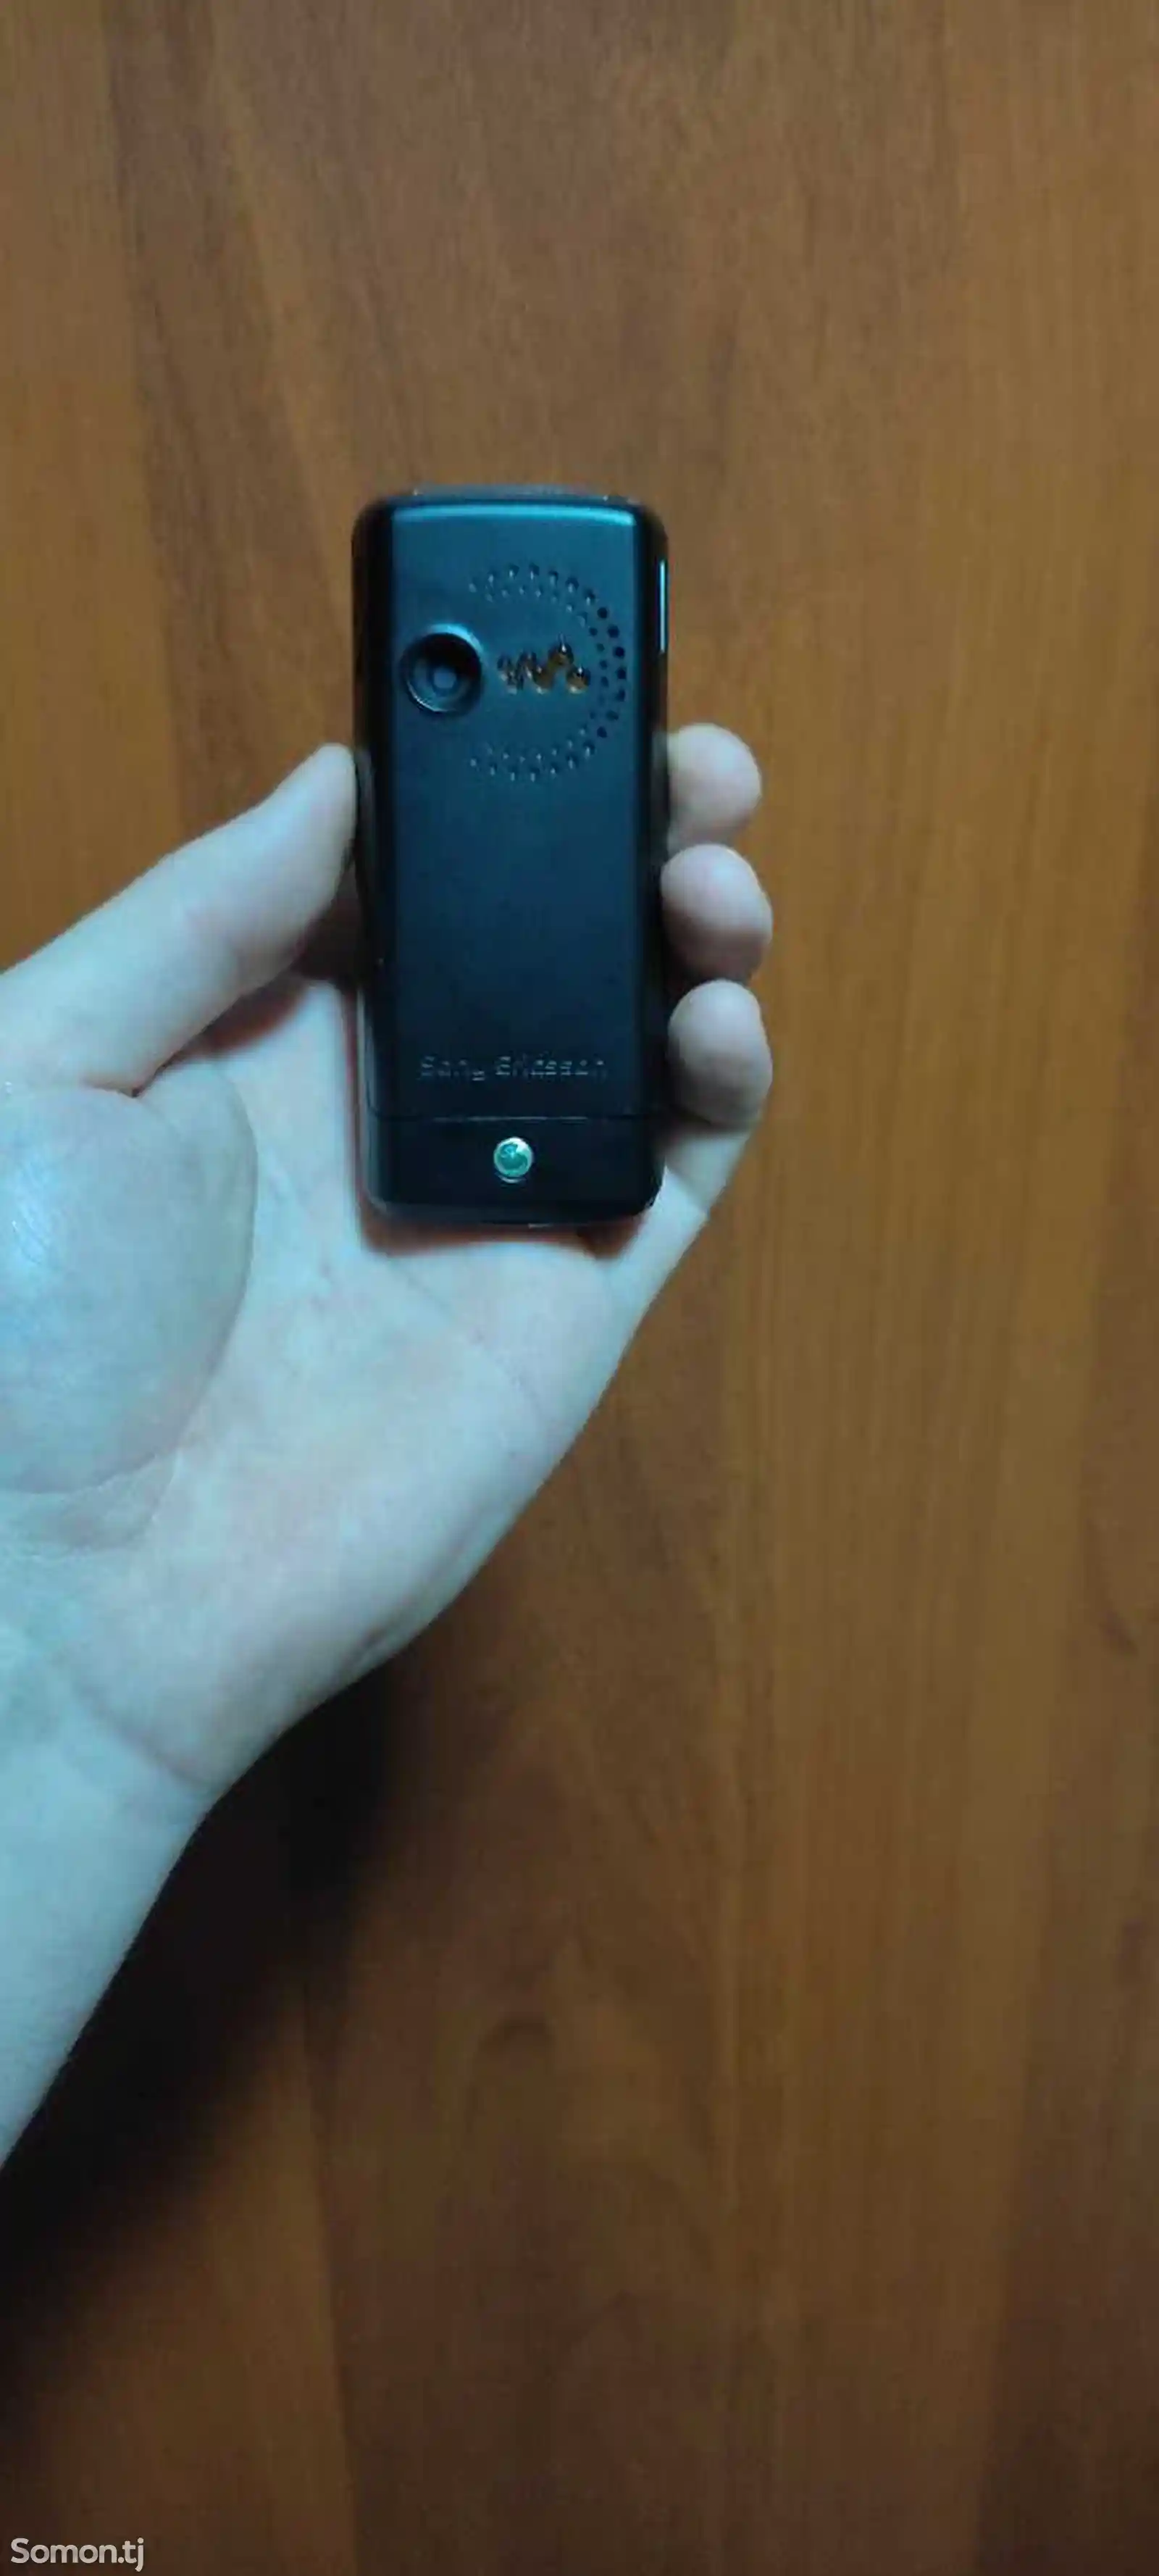 Sony Ericsson W200-3